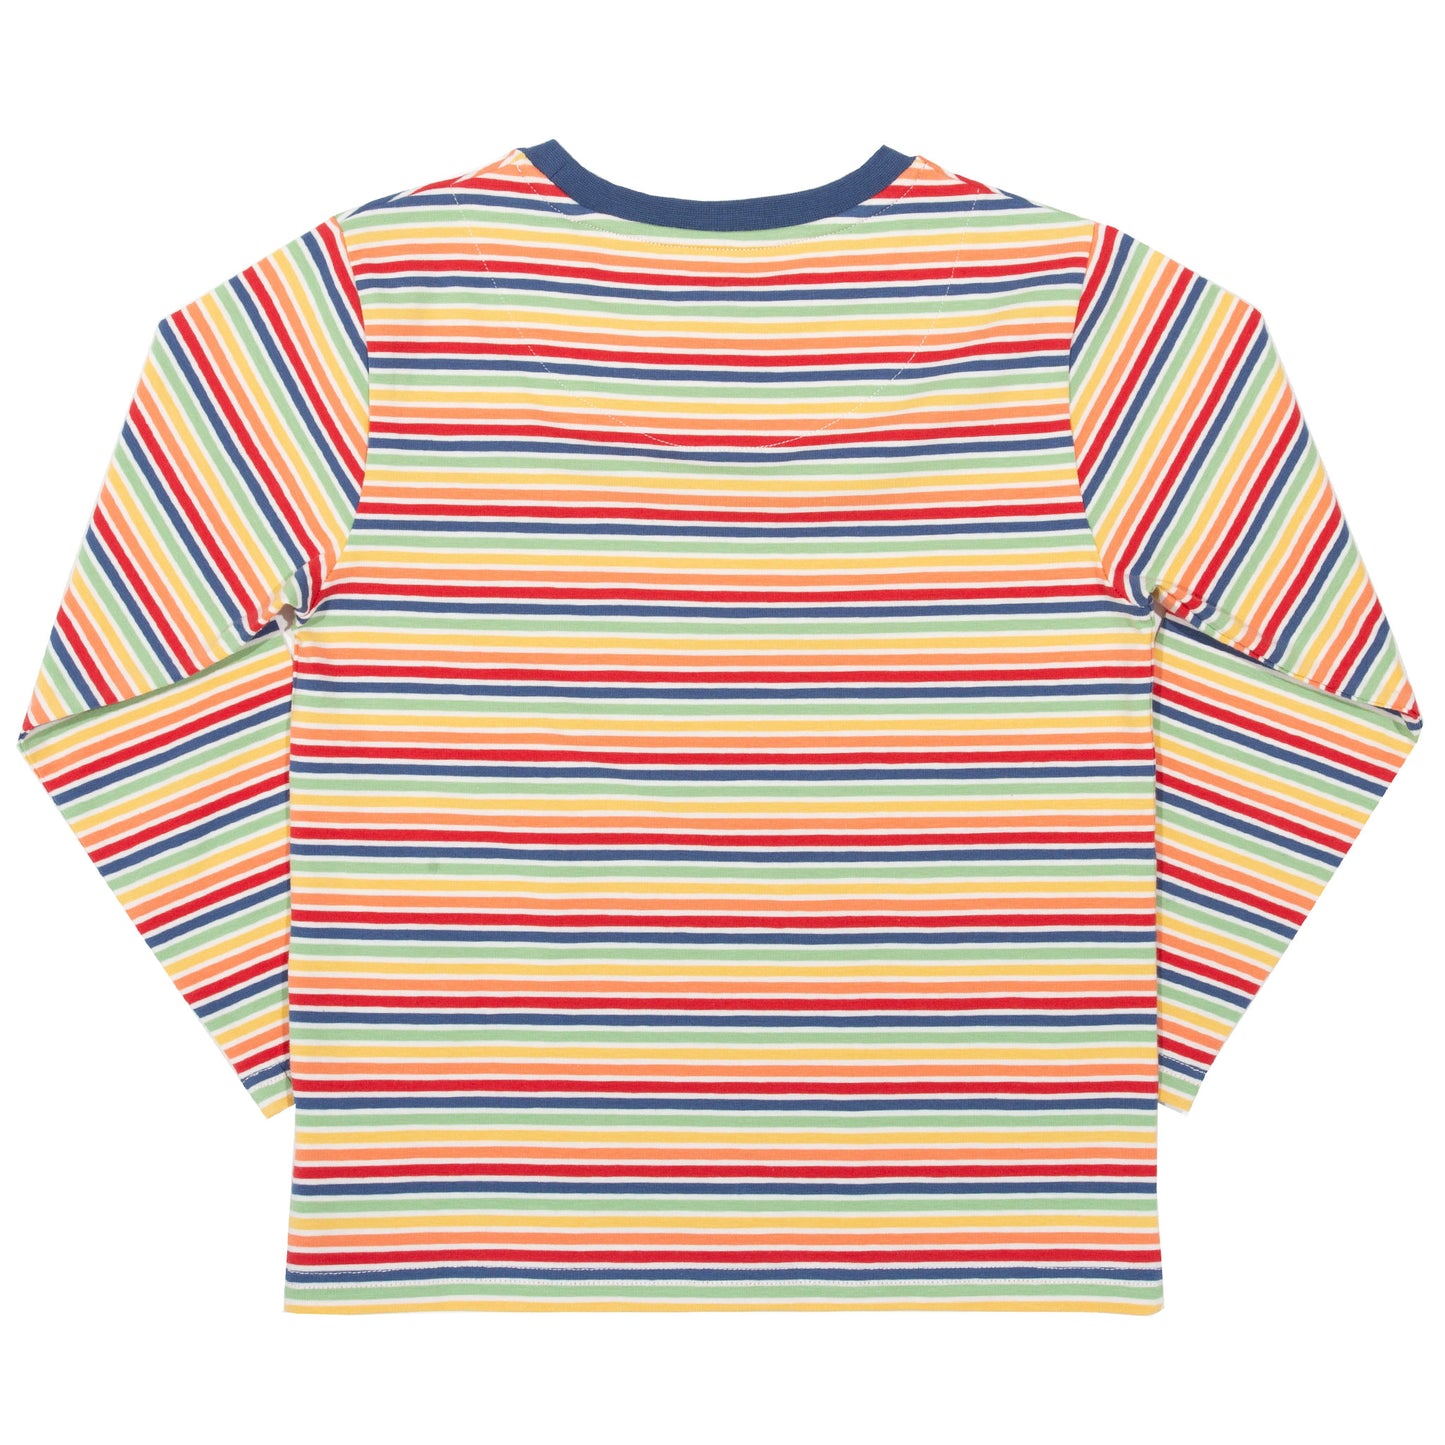 Rainbow stripe long sleeve top